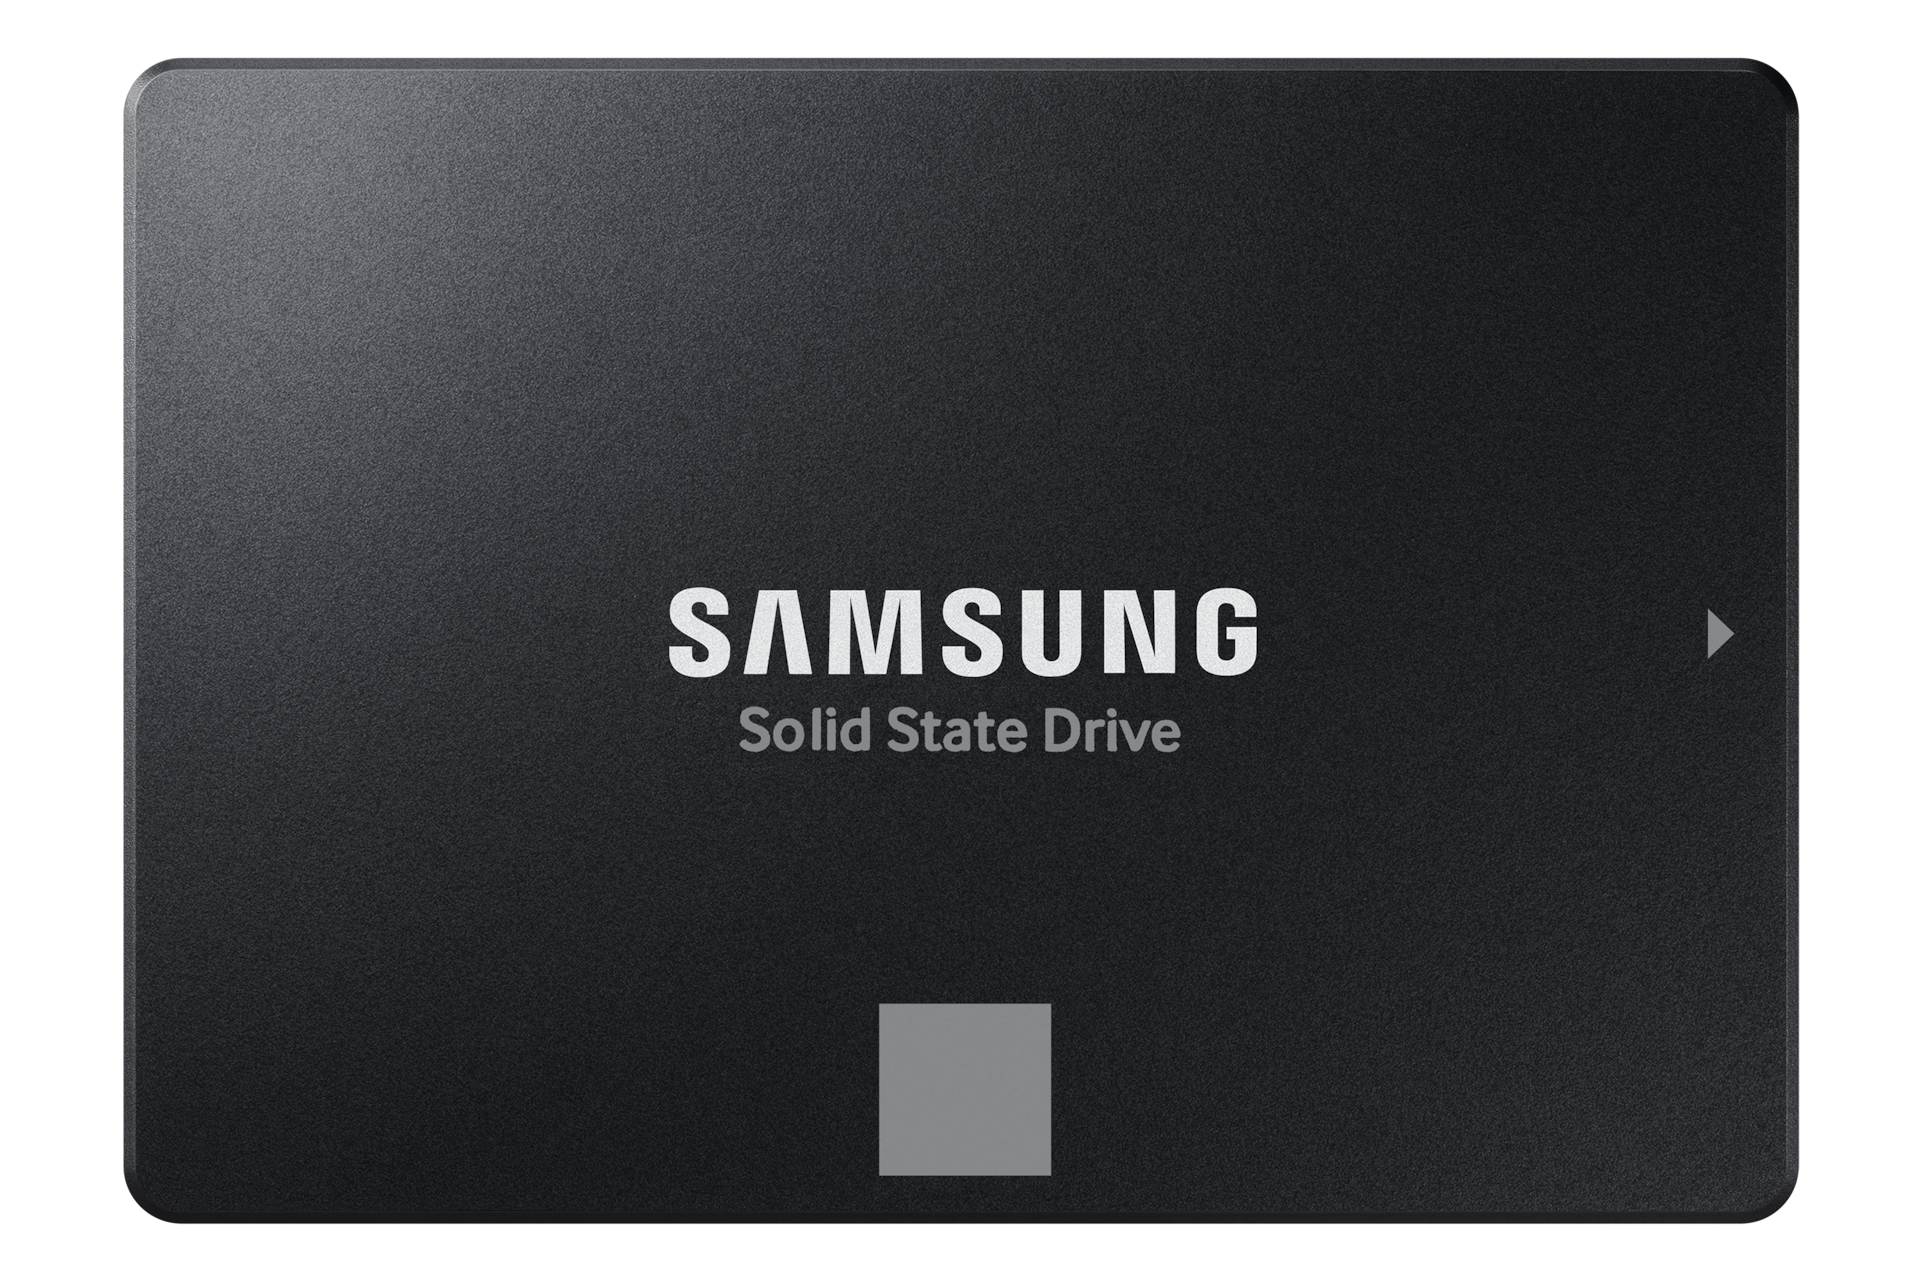 Samsung SSD 870 EVO SATA III 500GB - Black, Black